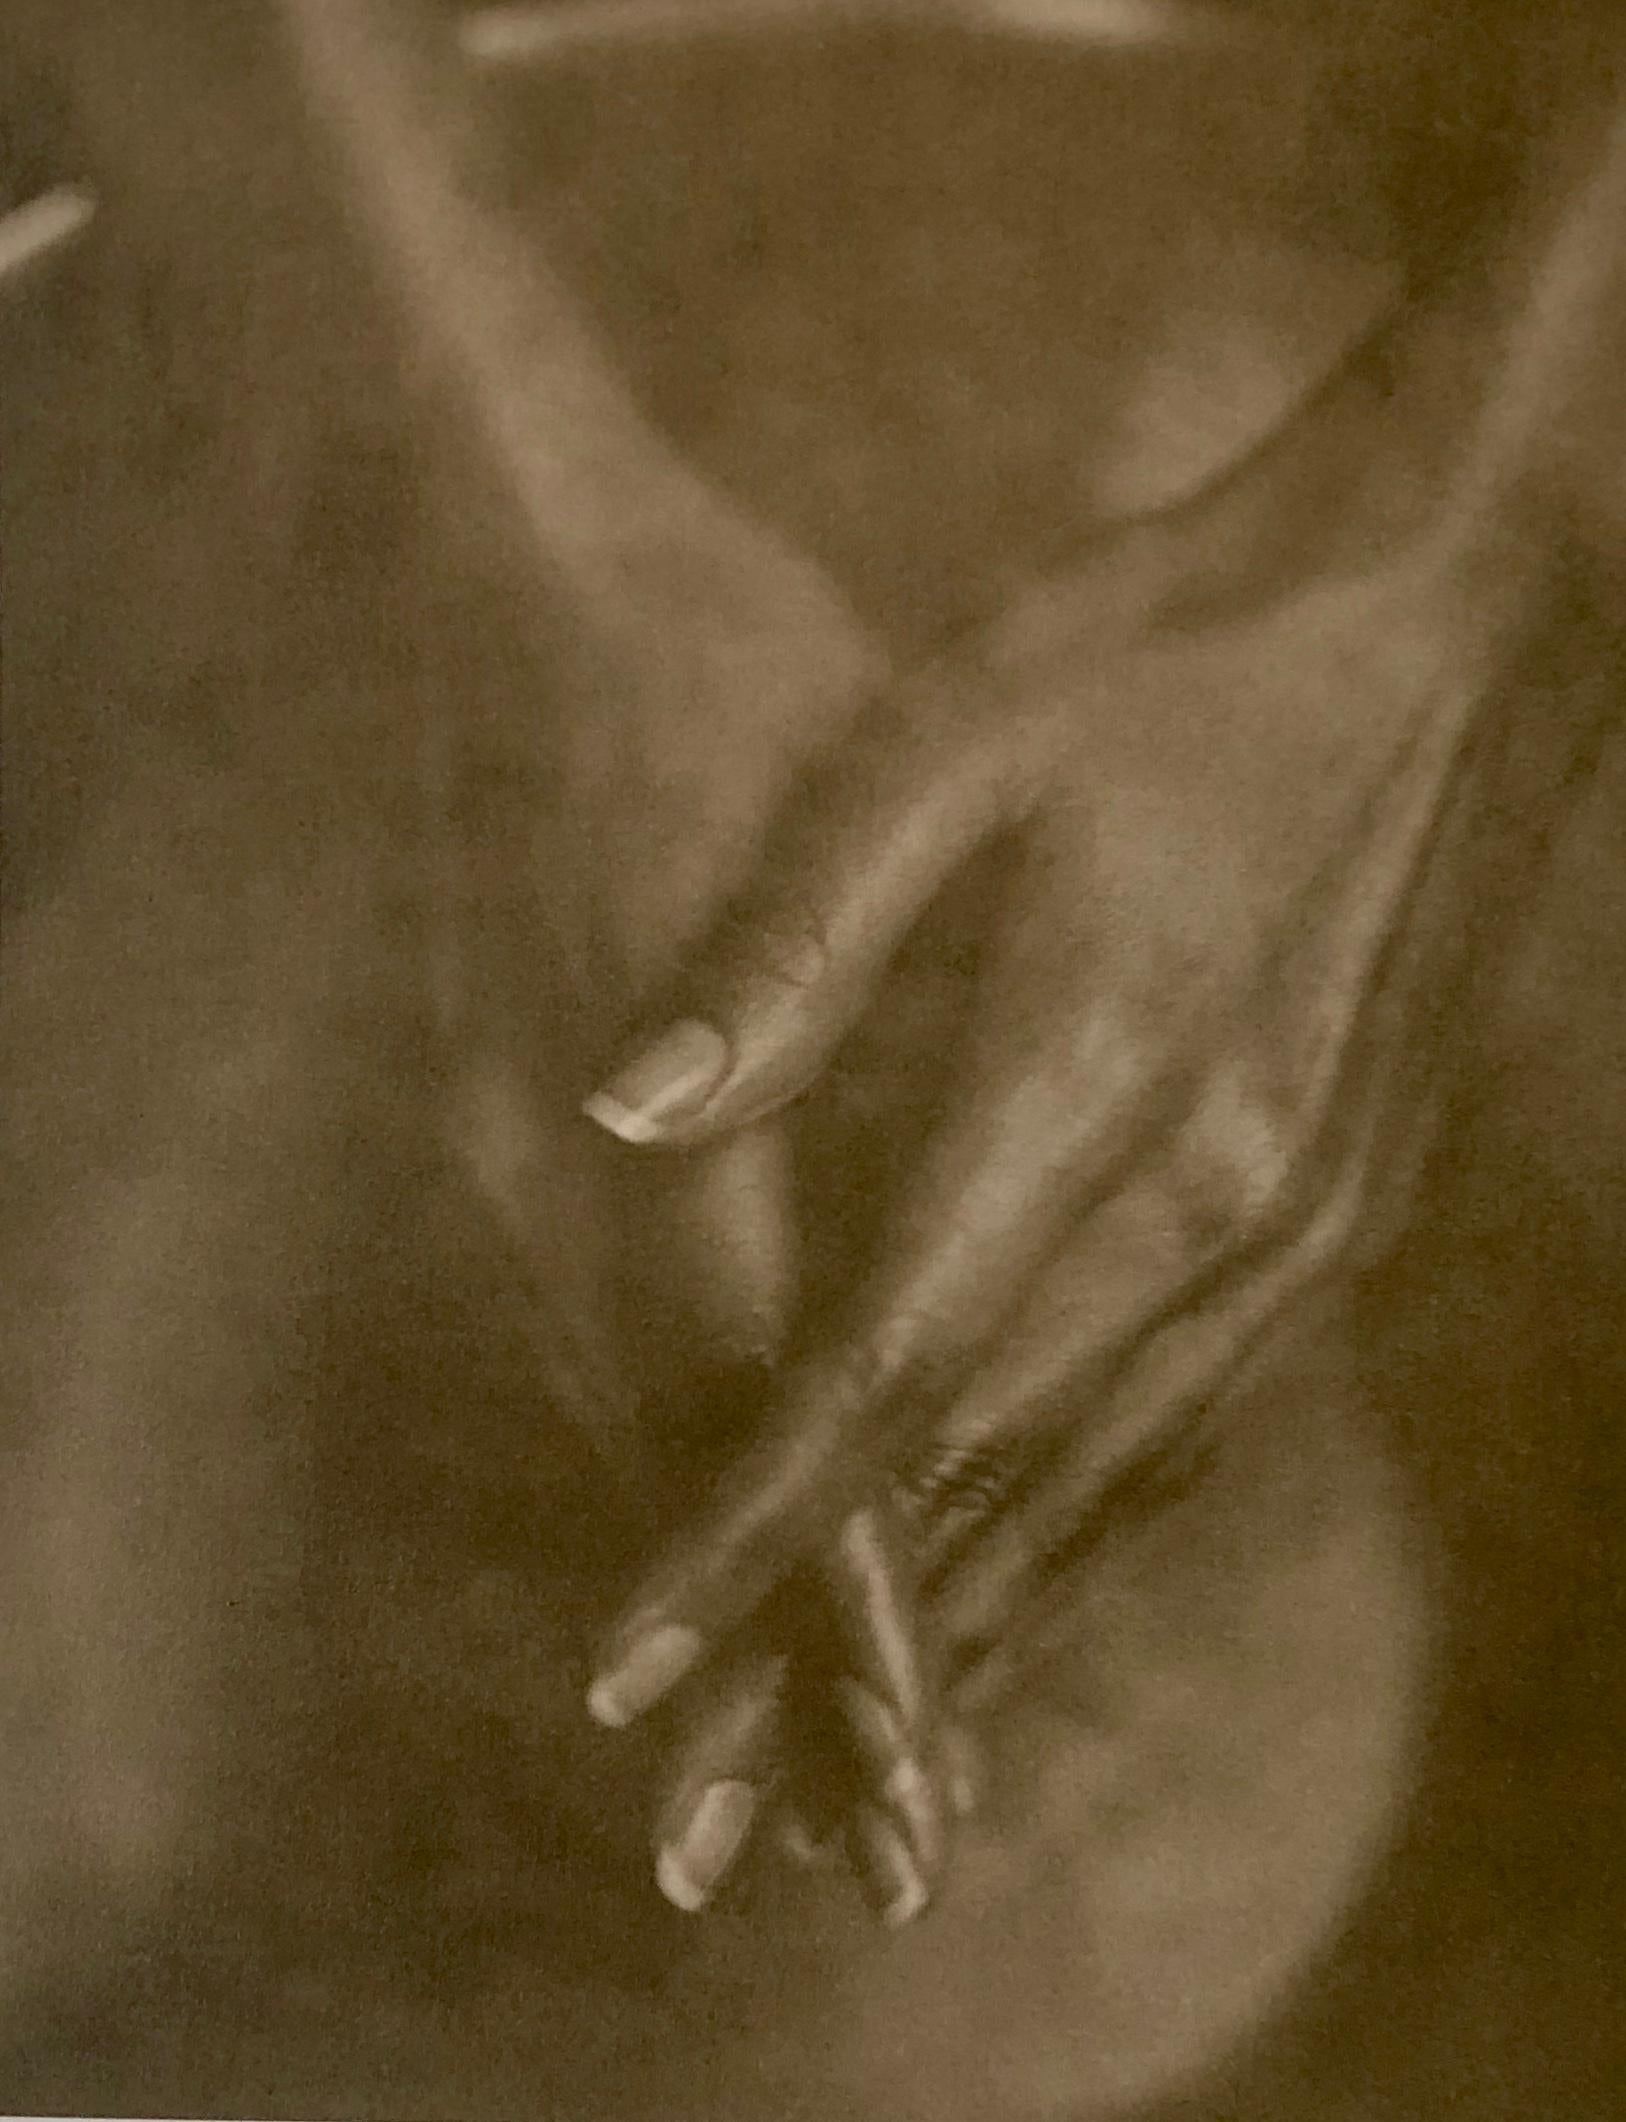 John Casado Figurative Photograph - Woman's Hands - lith silver gelatin print / unique still life photograph